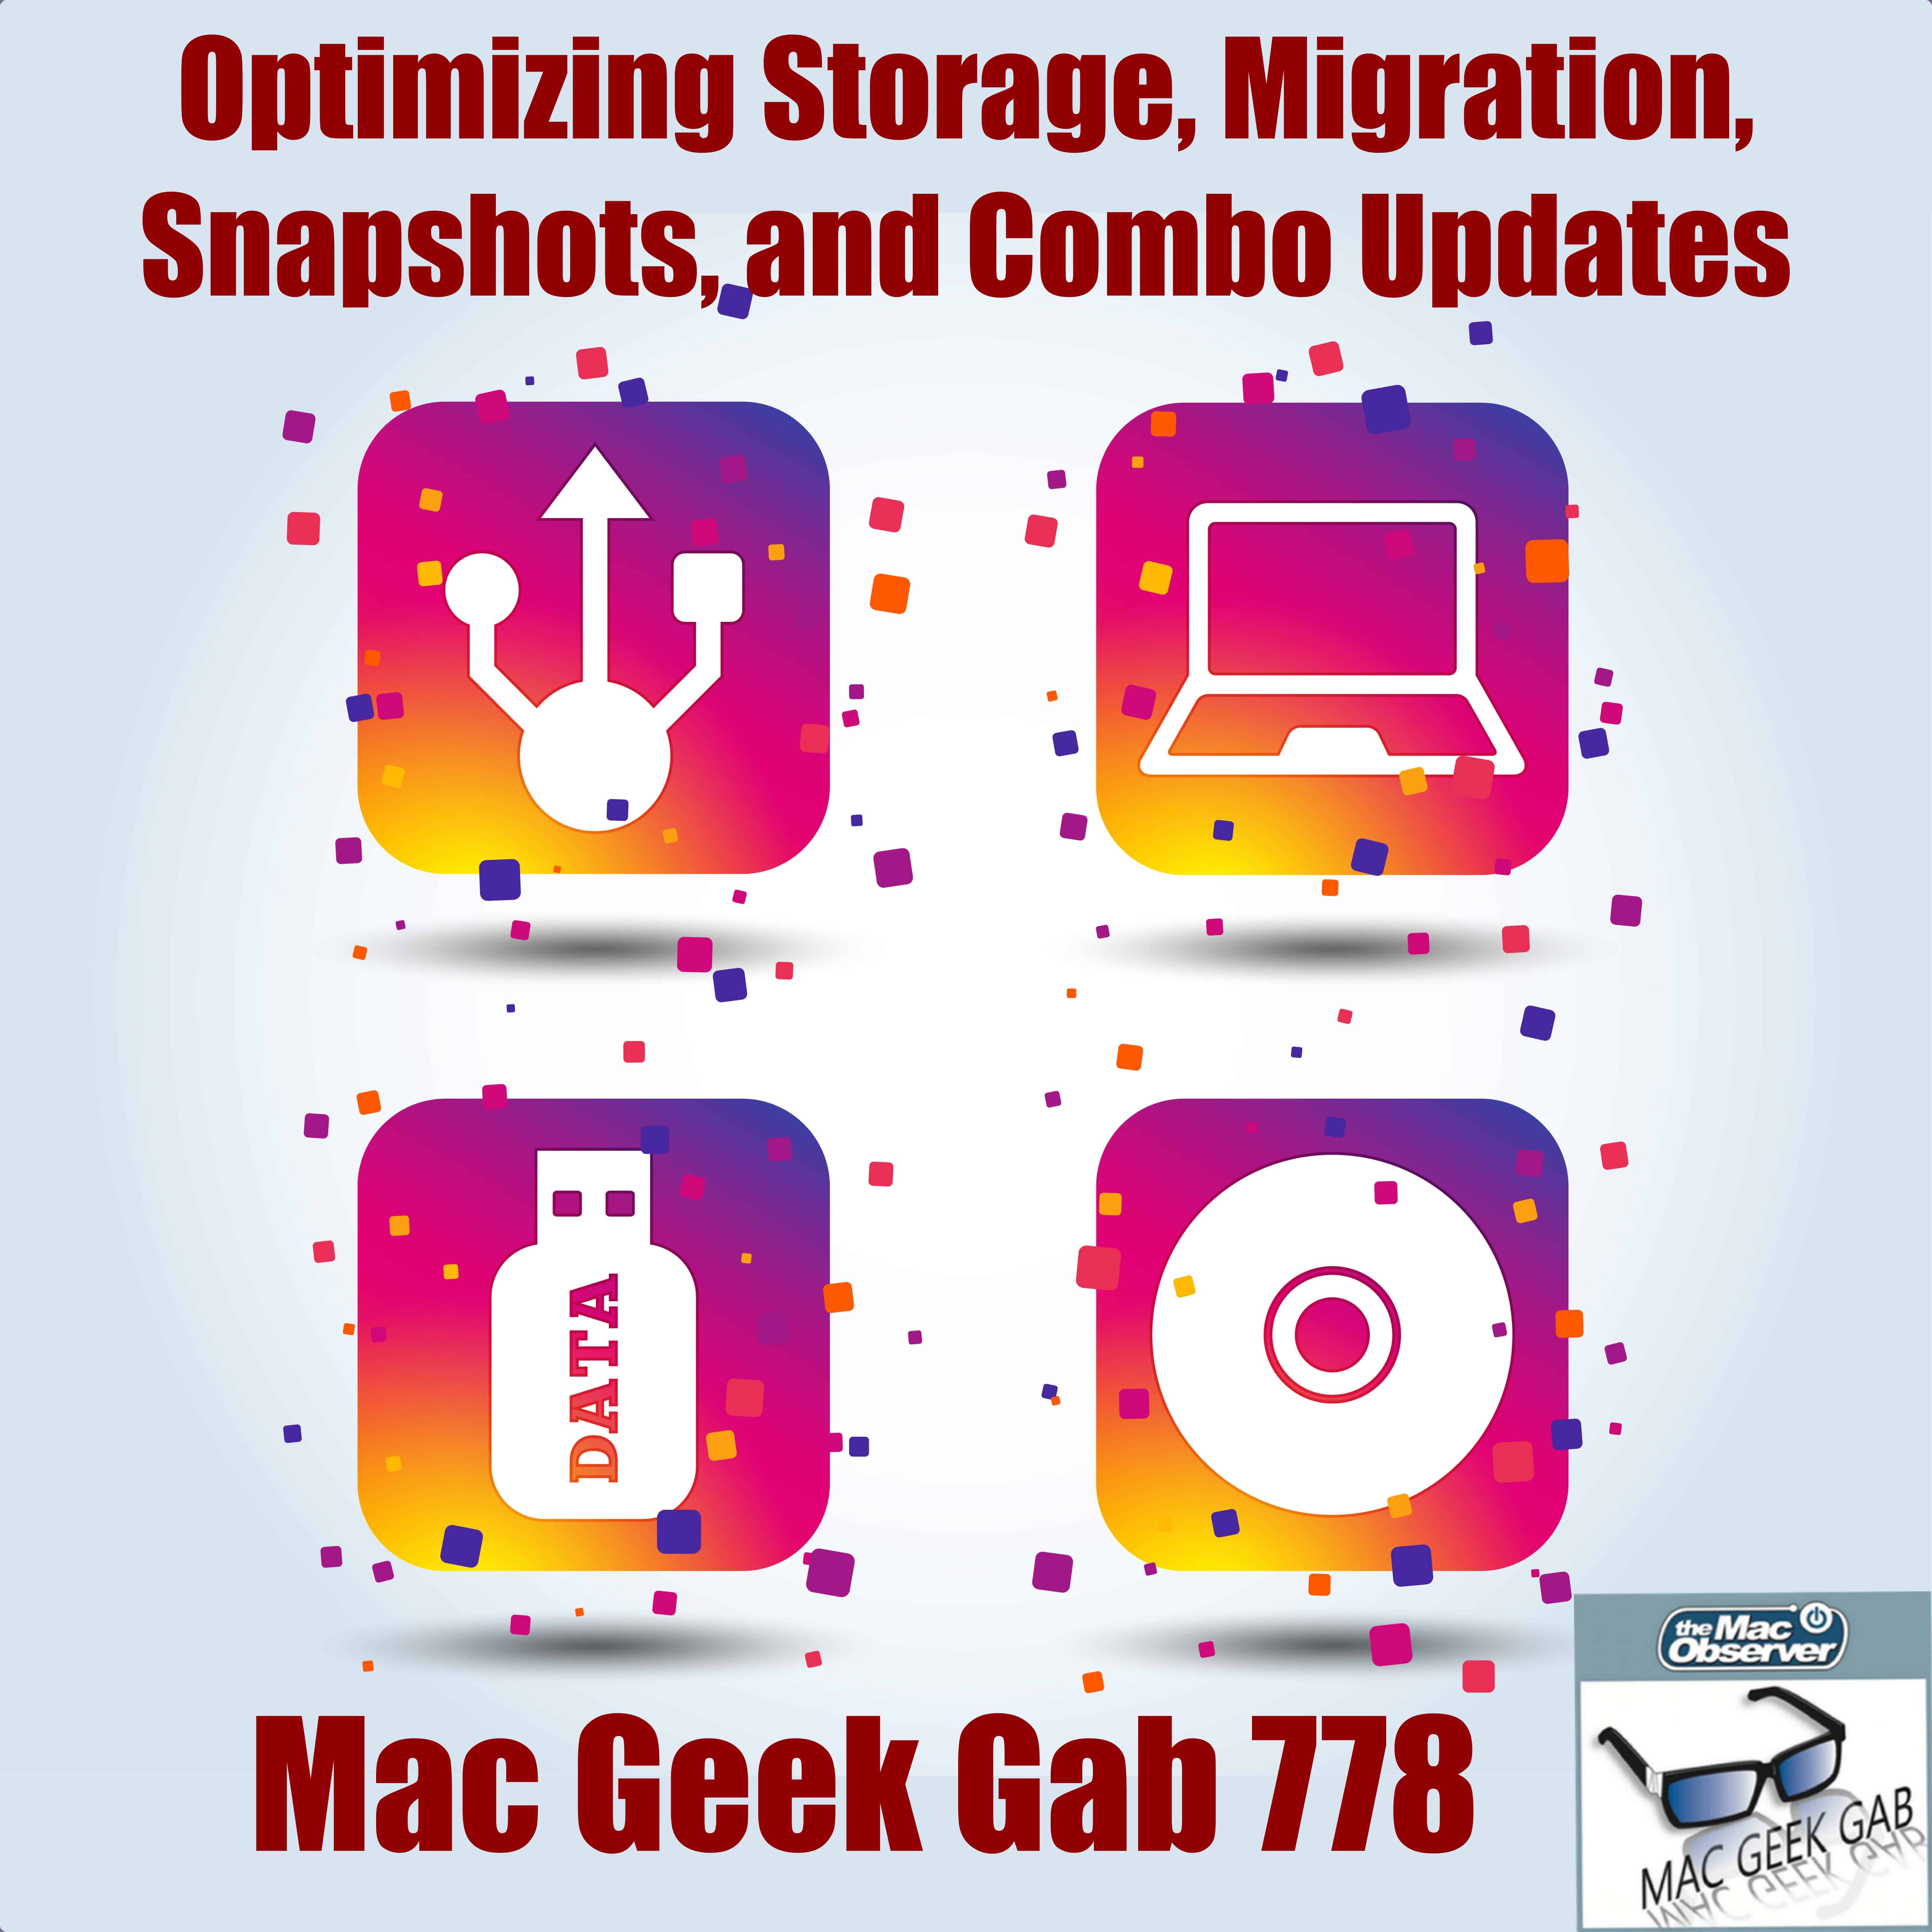 Optimizing Storage, Migration, Snapshots, and Combo Updates – Mac Geek Gab 778